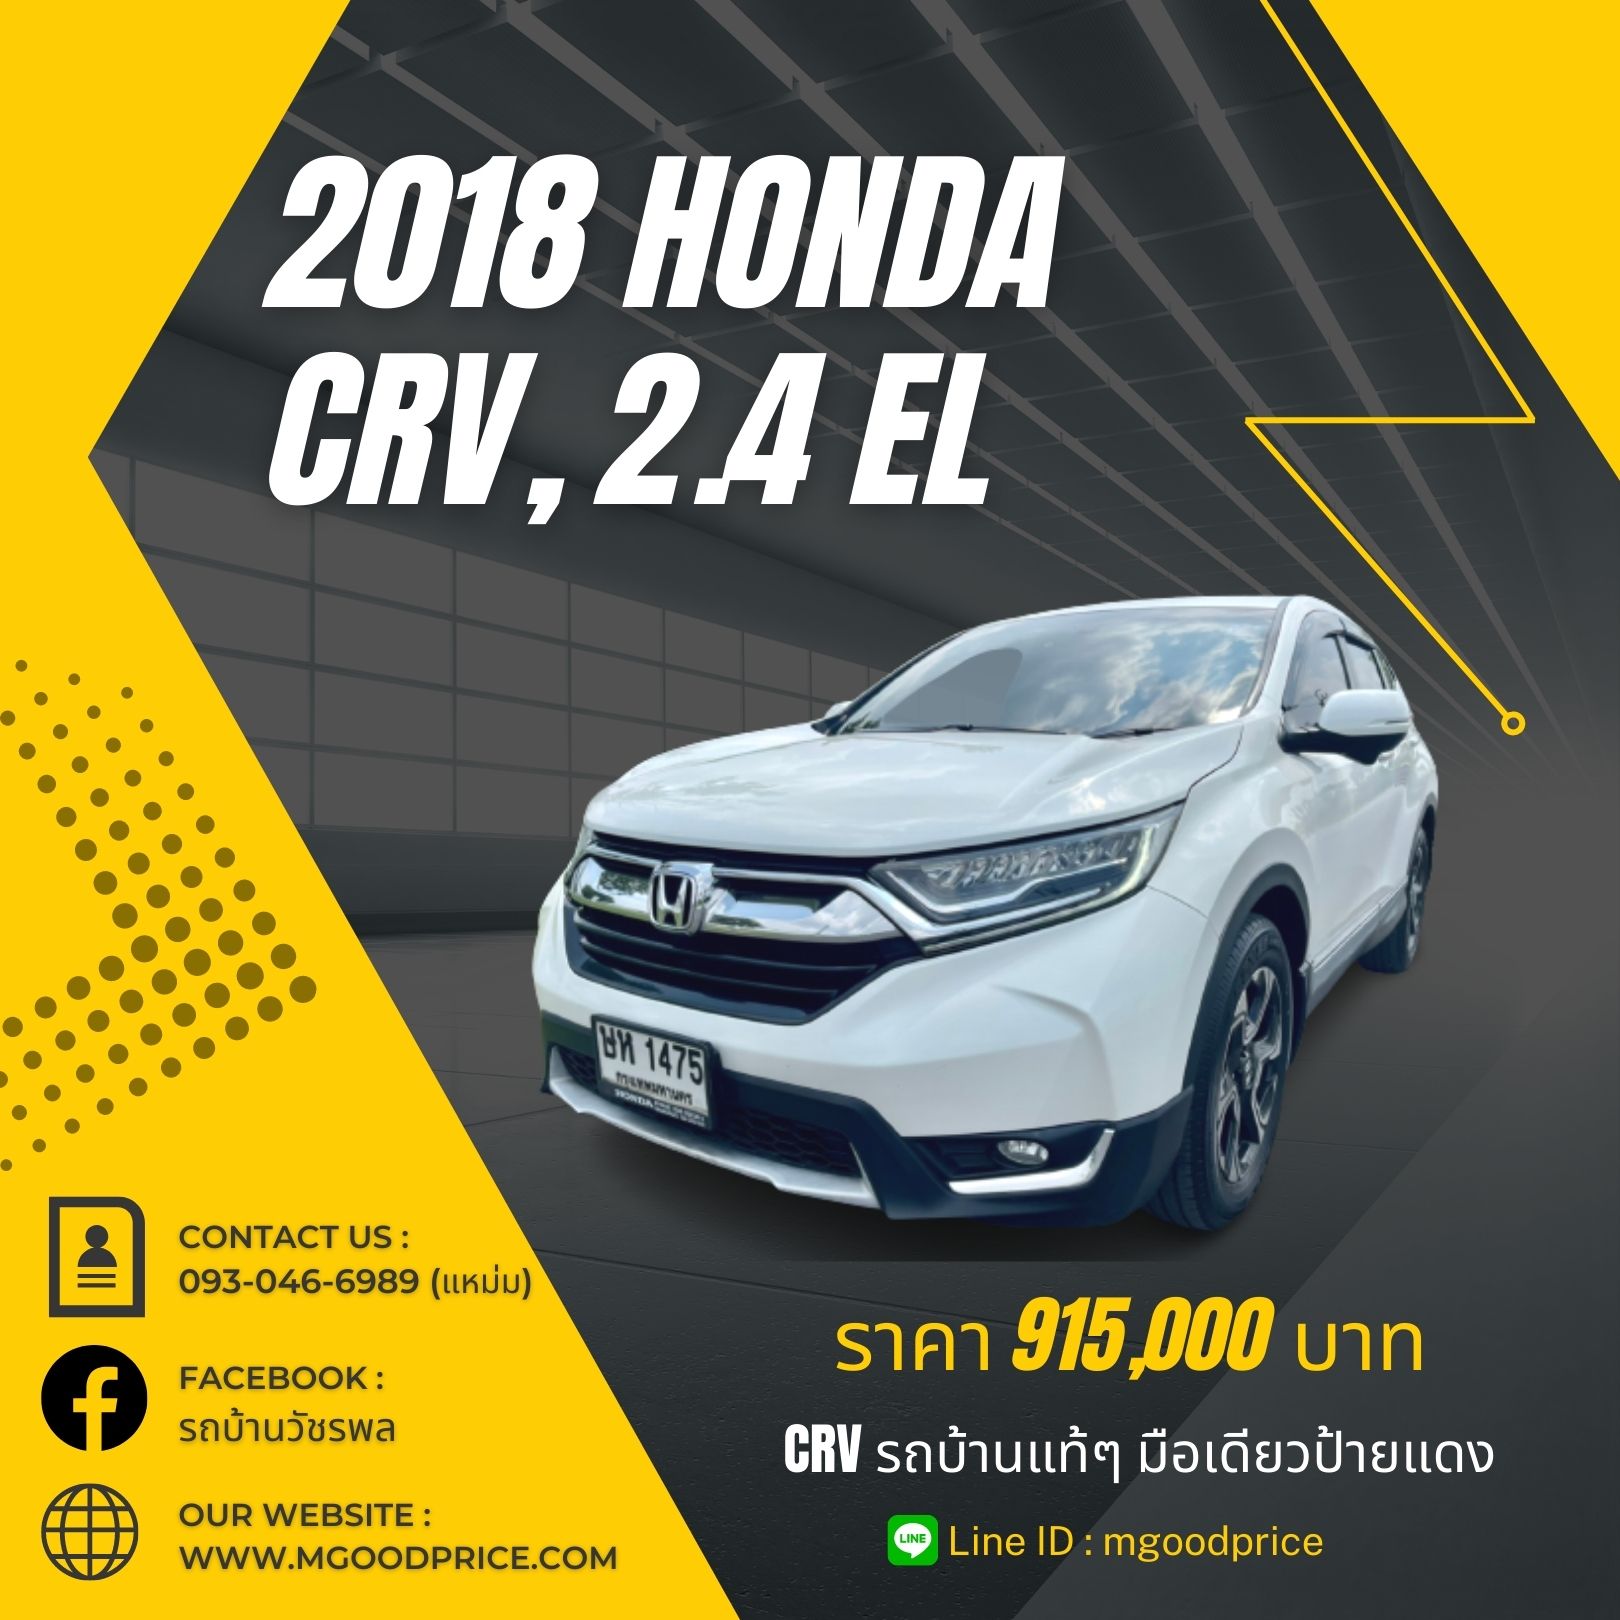 2018 HONDA CRV, 2.4 EL (i-VTEC) โฉม ปี17-ปัจจุบัน